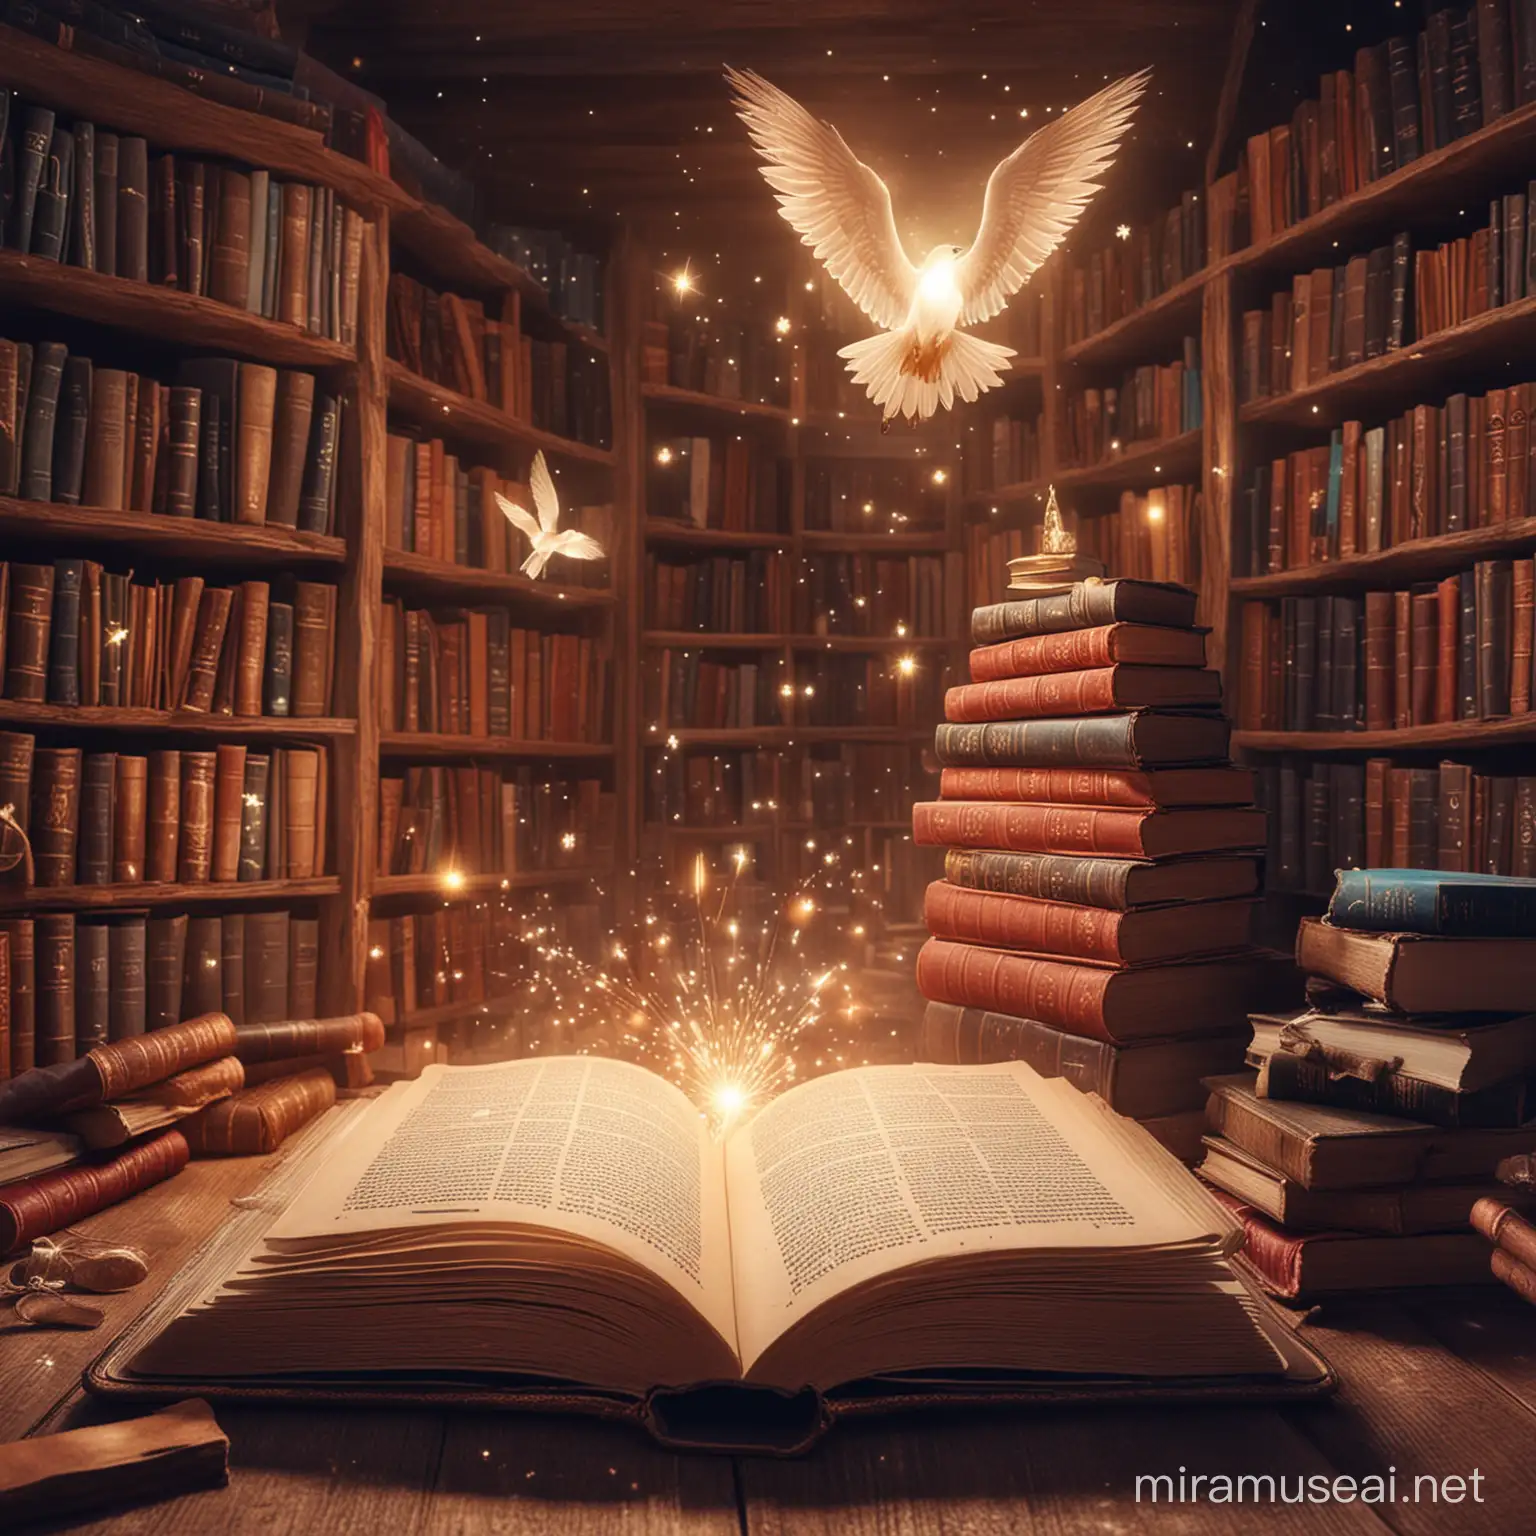 Magical books